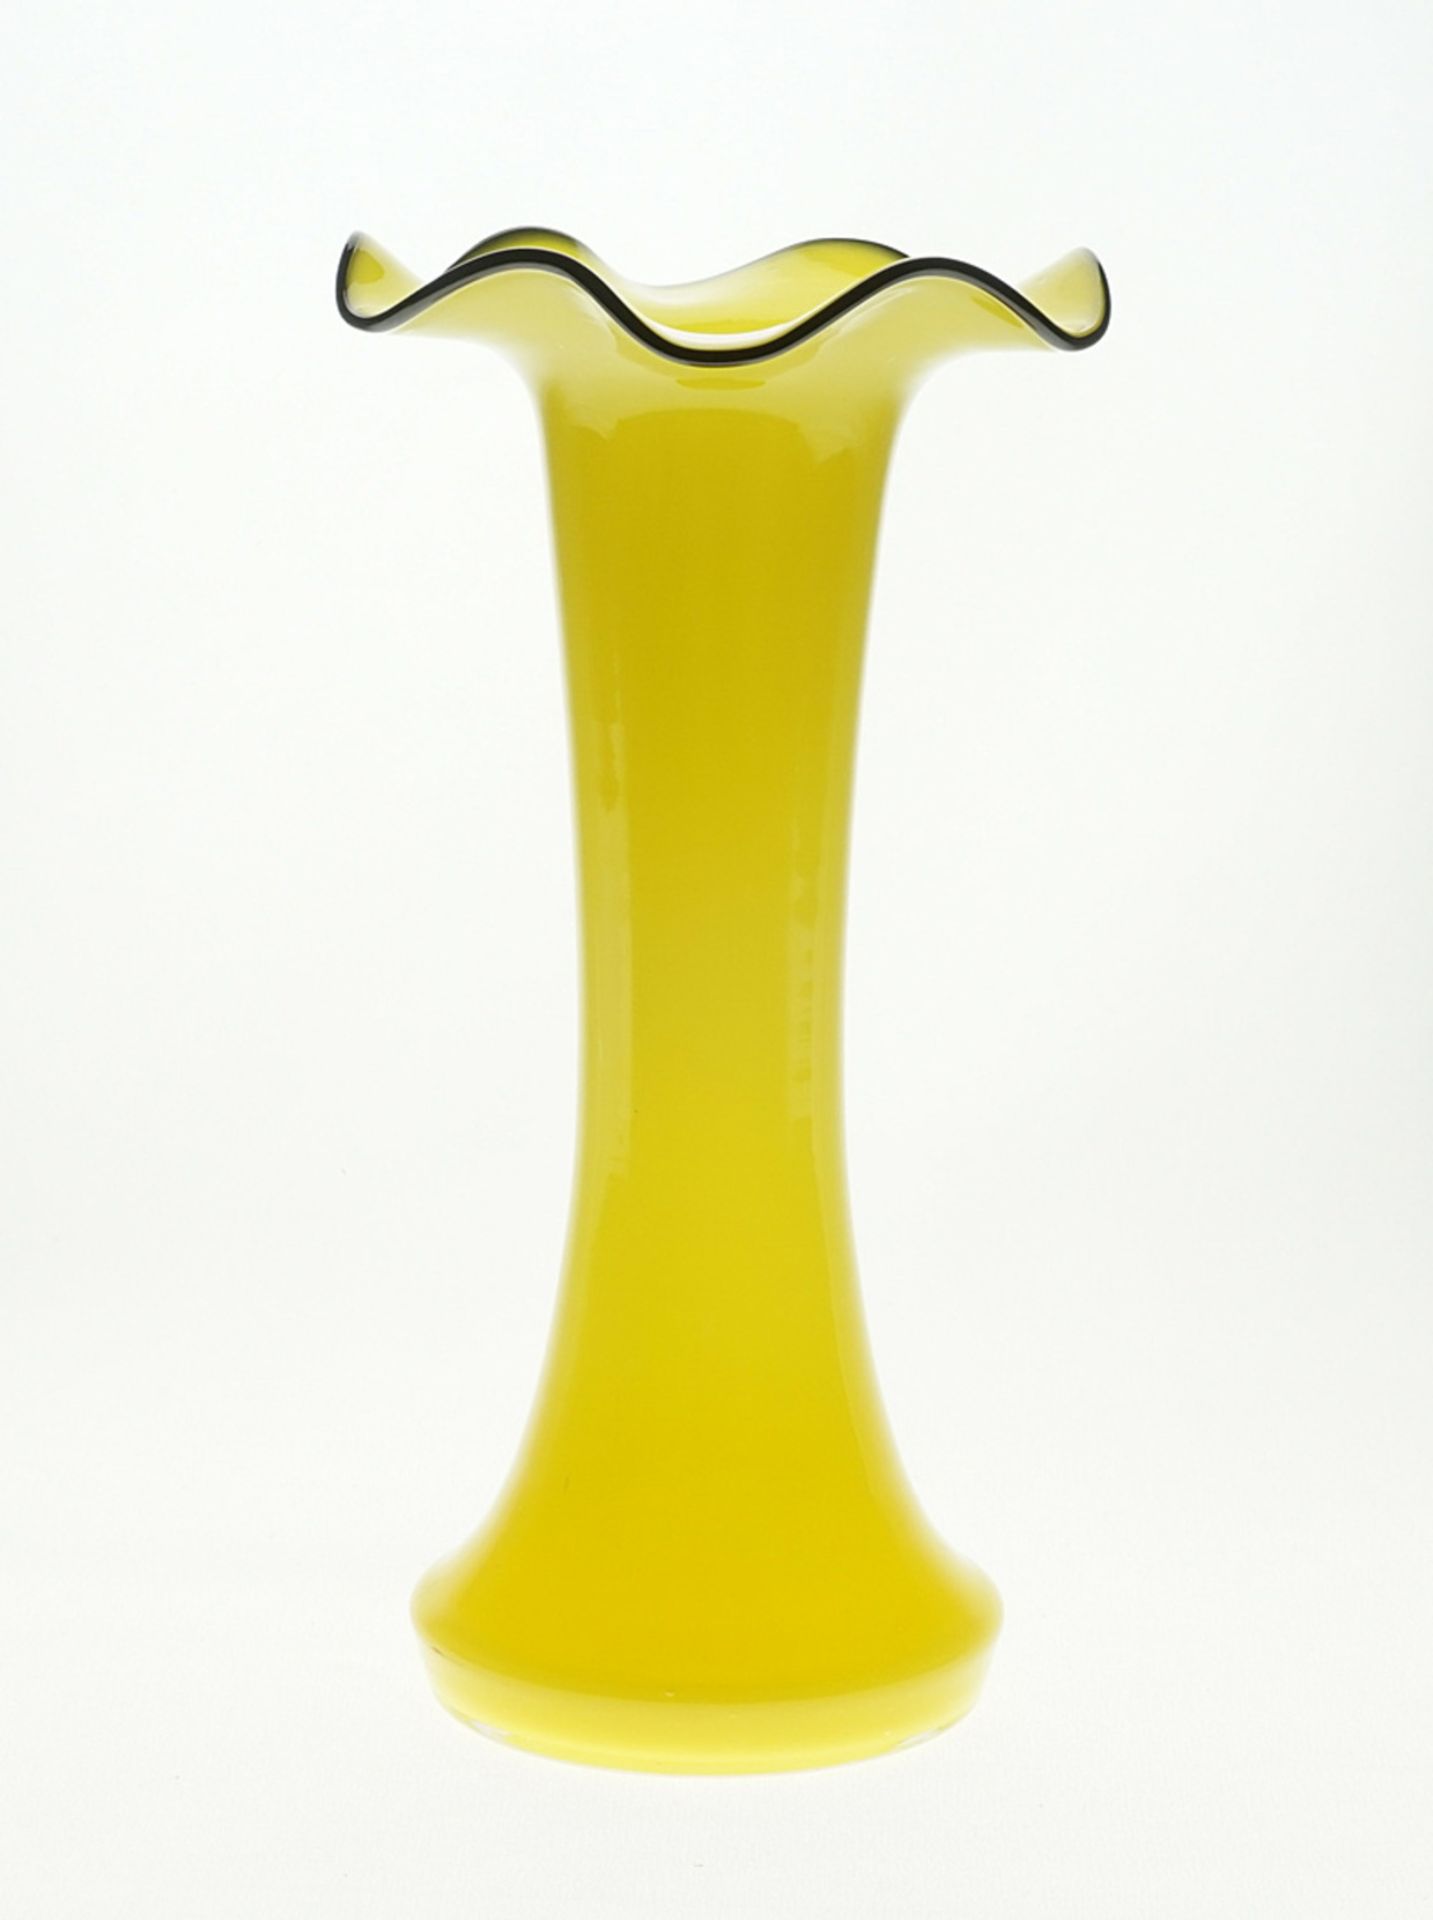 Probably Loetz Tango glass vase